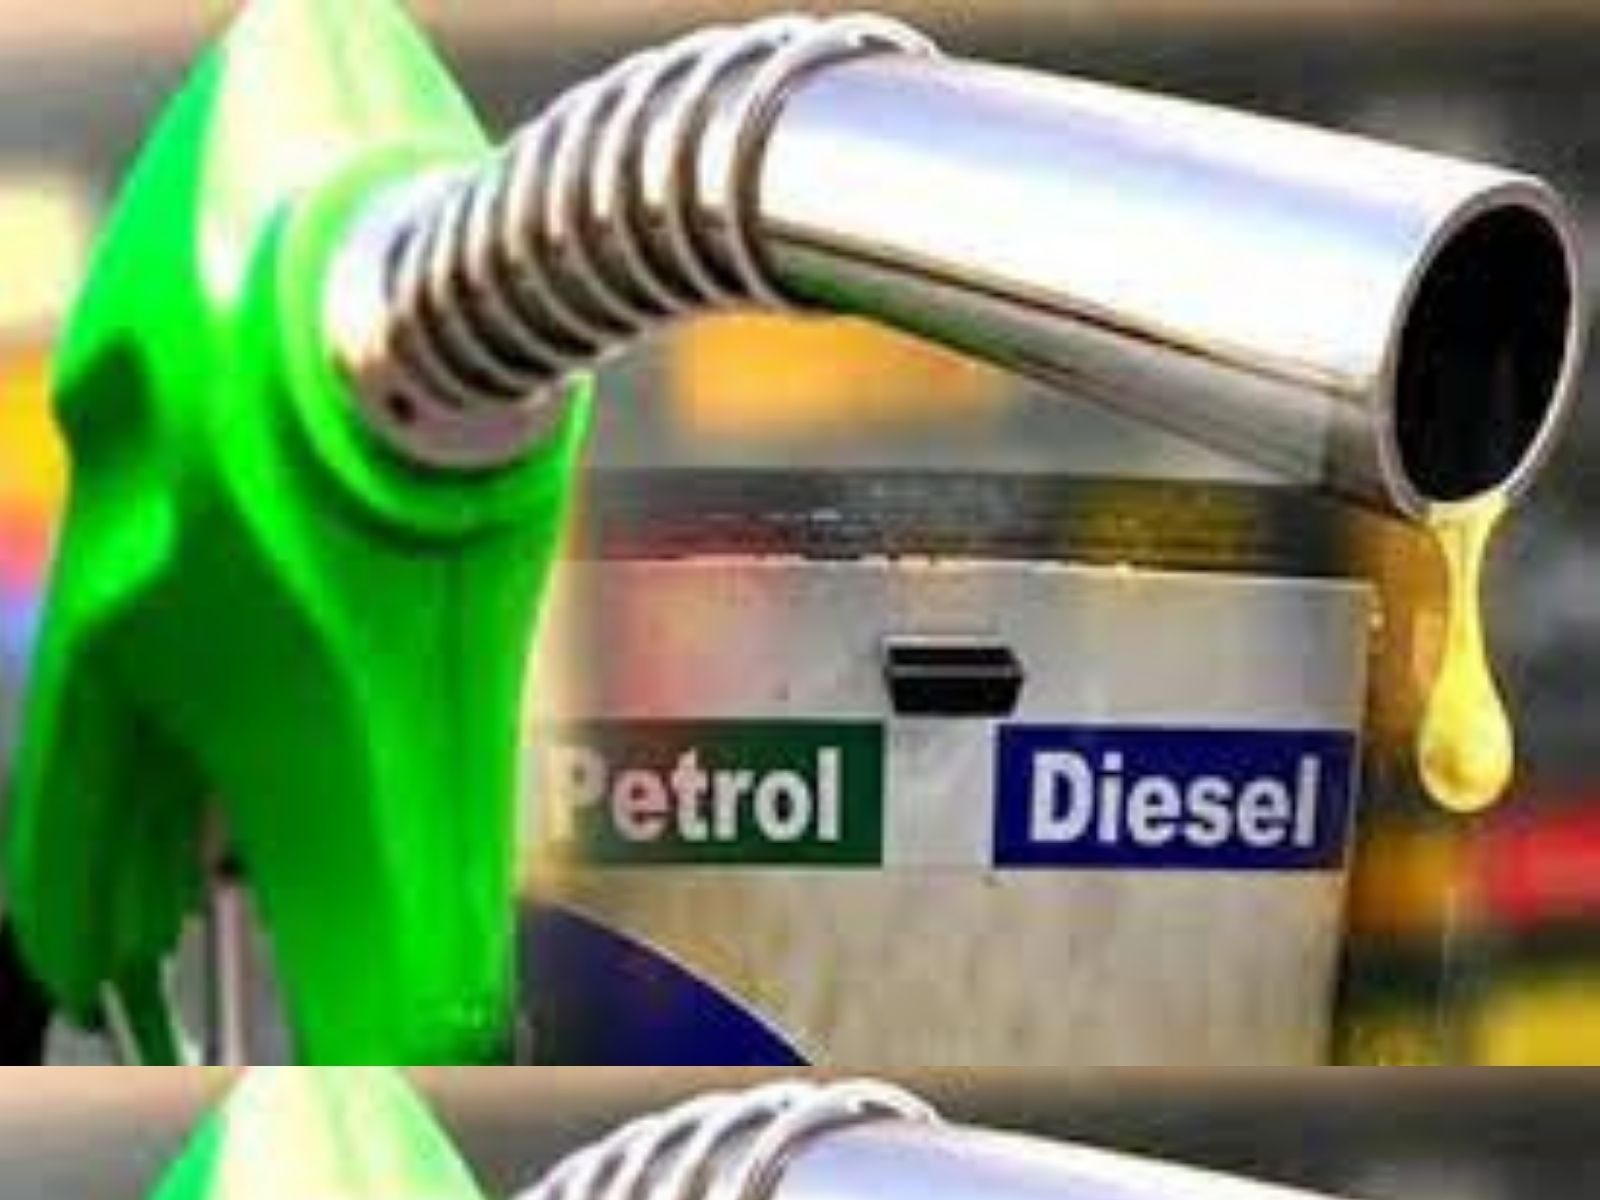  Petrol Diesel Prices: ਪੈਟਰੋਲ ਅਤੇ ਡੀਜ਼ਲ ਦੇ ਨਵੇਂ ਰੇਟ ਜਾਰੀ, ਚੈੱਕ ਕਰੋ ਆਪਣੇ ਸ਼ਹਿਰ ਦੇ ਭਾਅ
